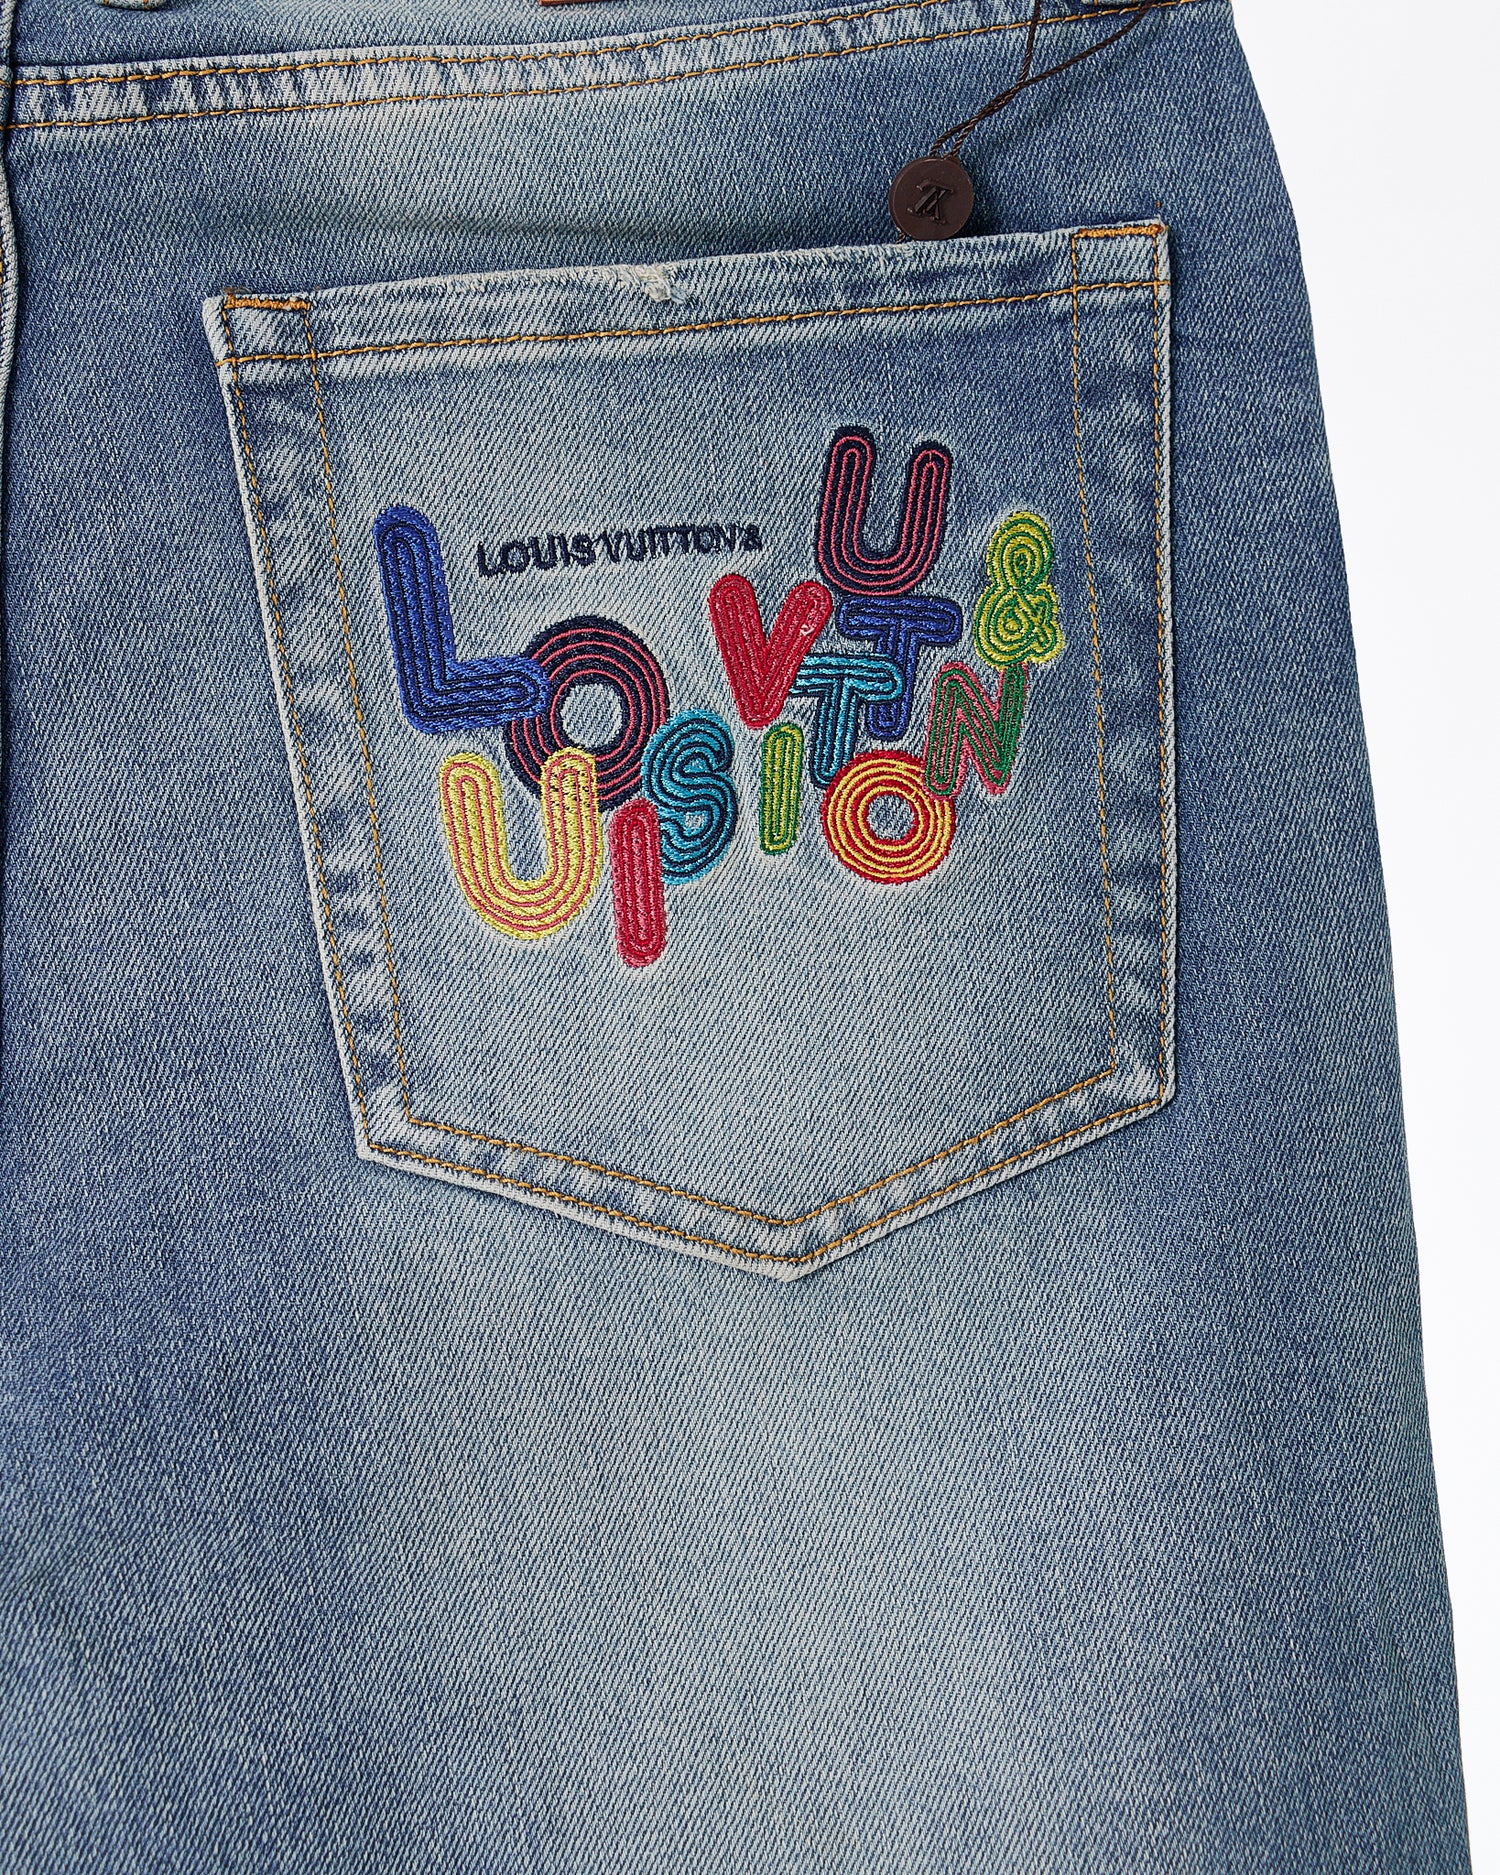 LV Colorful Logo Printed Men Blue Jeans 70.90